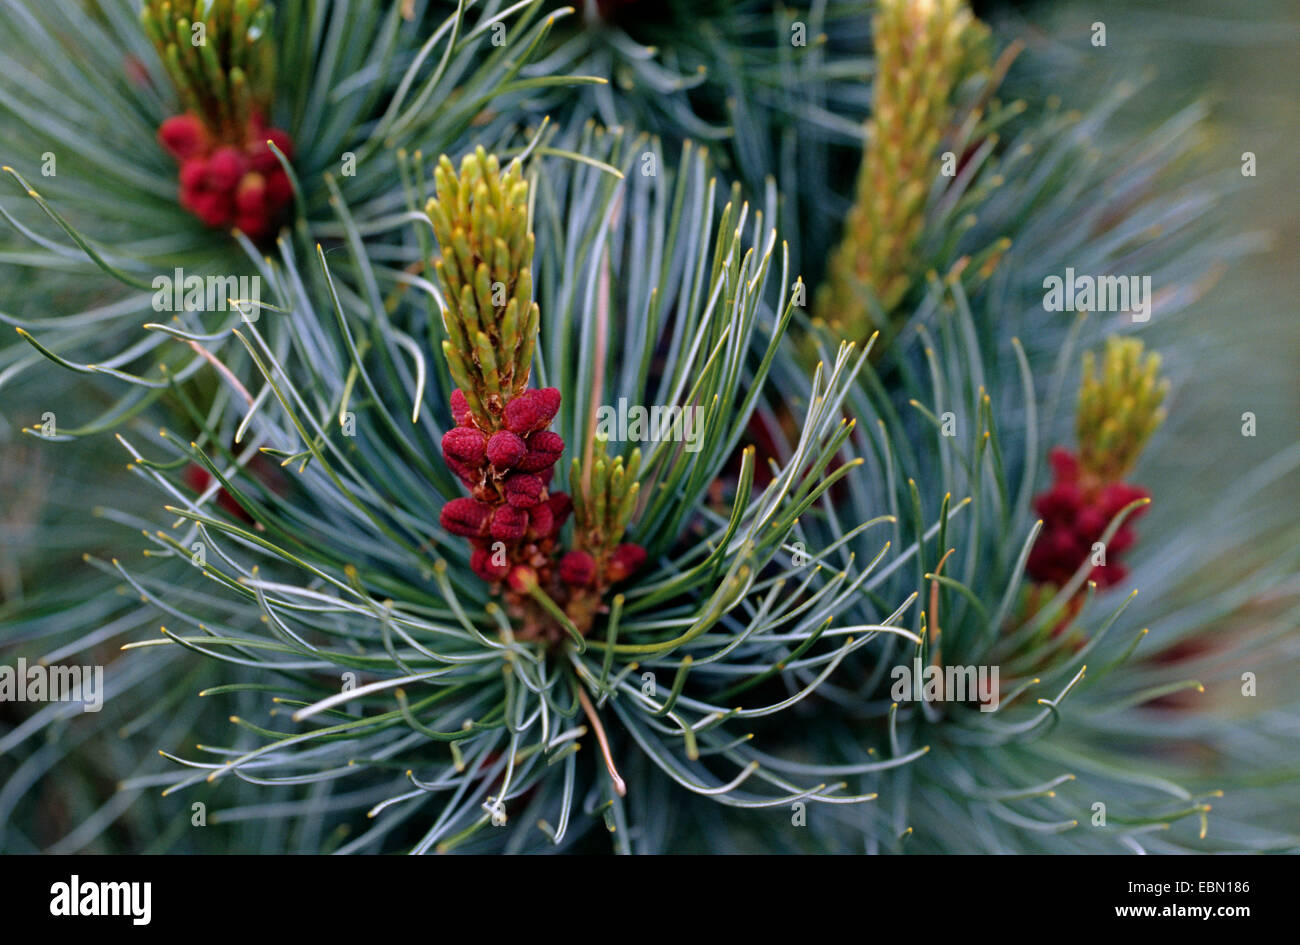 European black pine, Austrian pine, Black Pine, Corsican Pine (Pinus nigra 'Pyramidata', Pinus nigra Pyramidata), branch with blooming cones Stock Photo